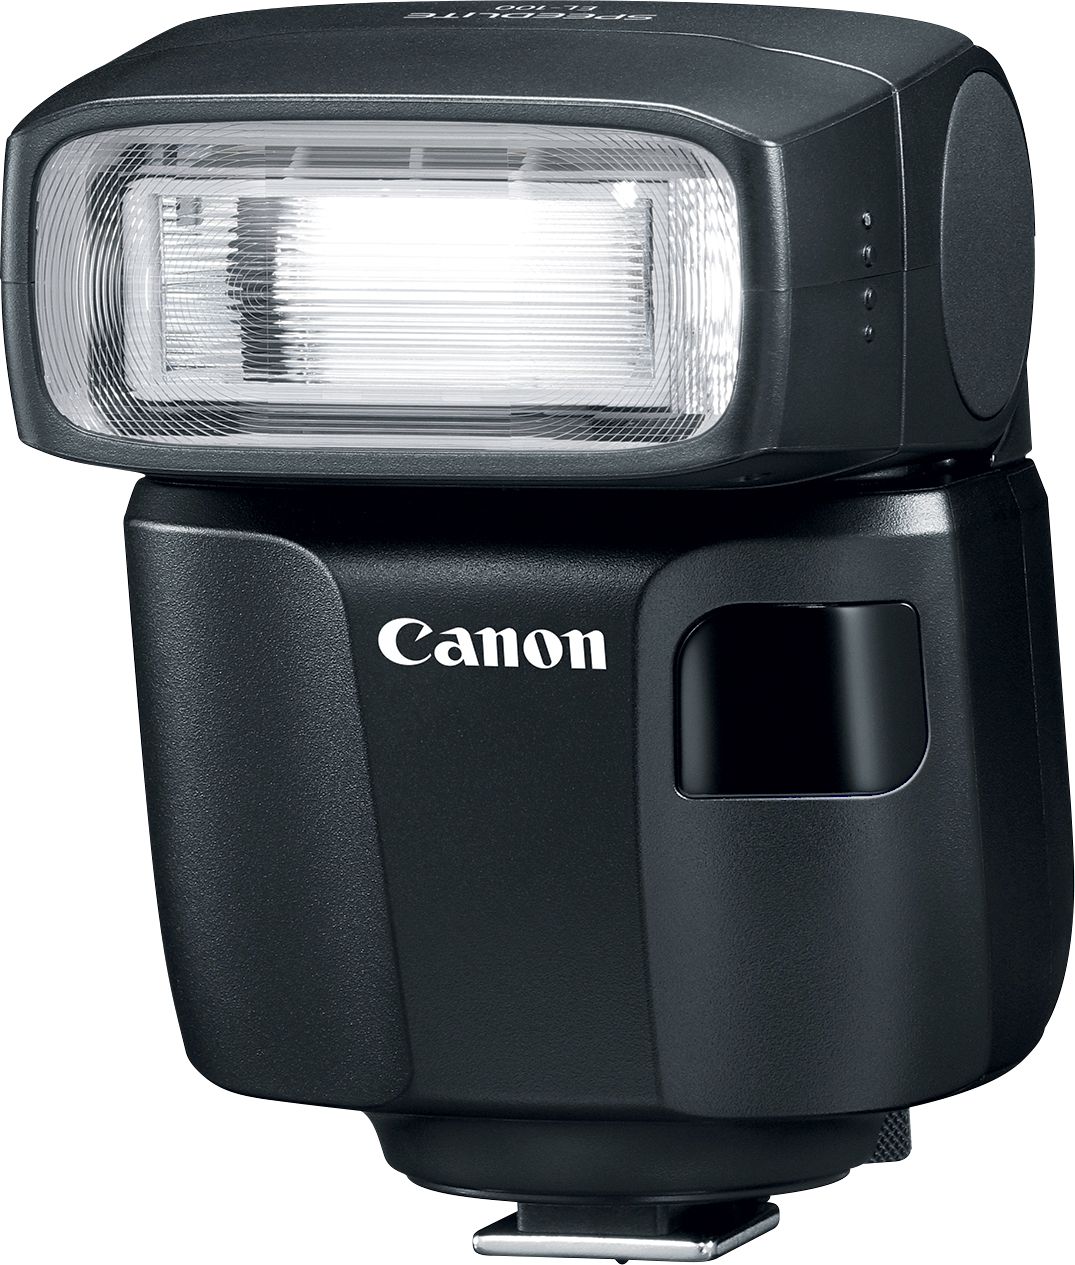 Angle View: Canon - Speedlite EL-100 External Flash